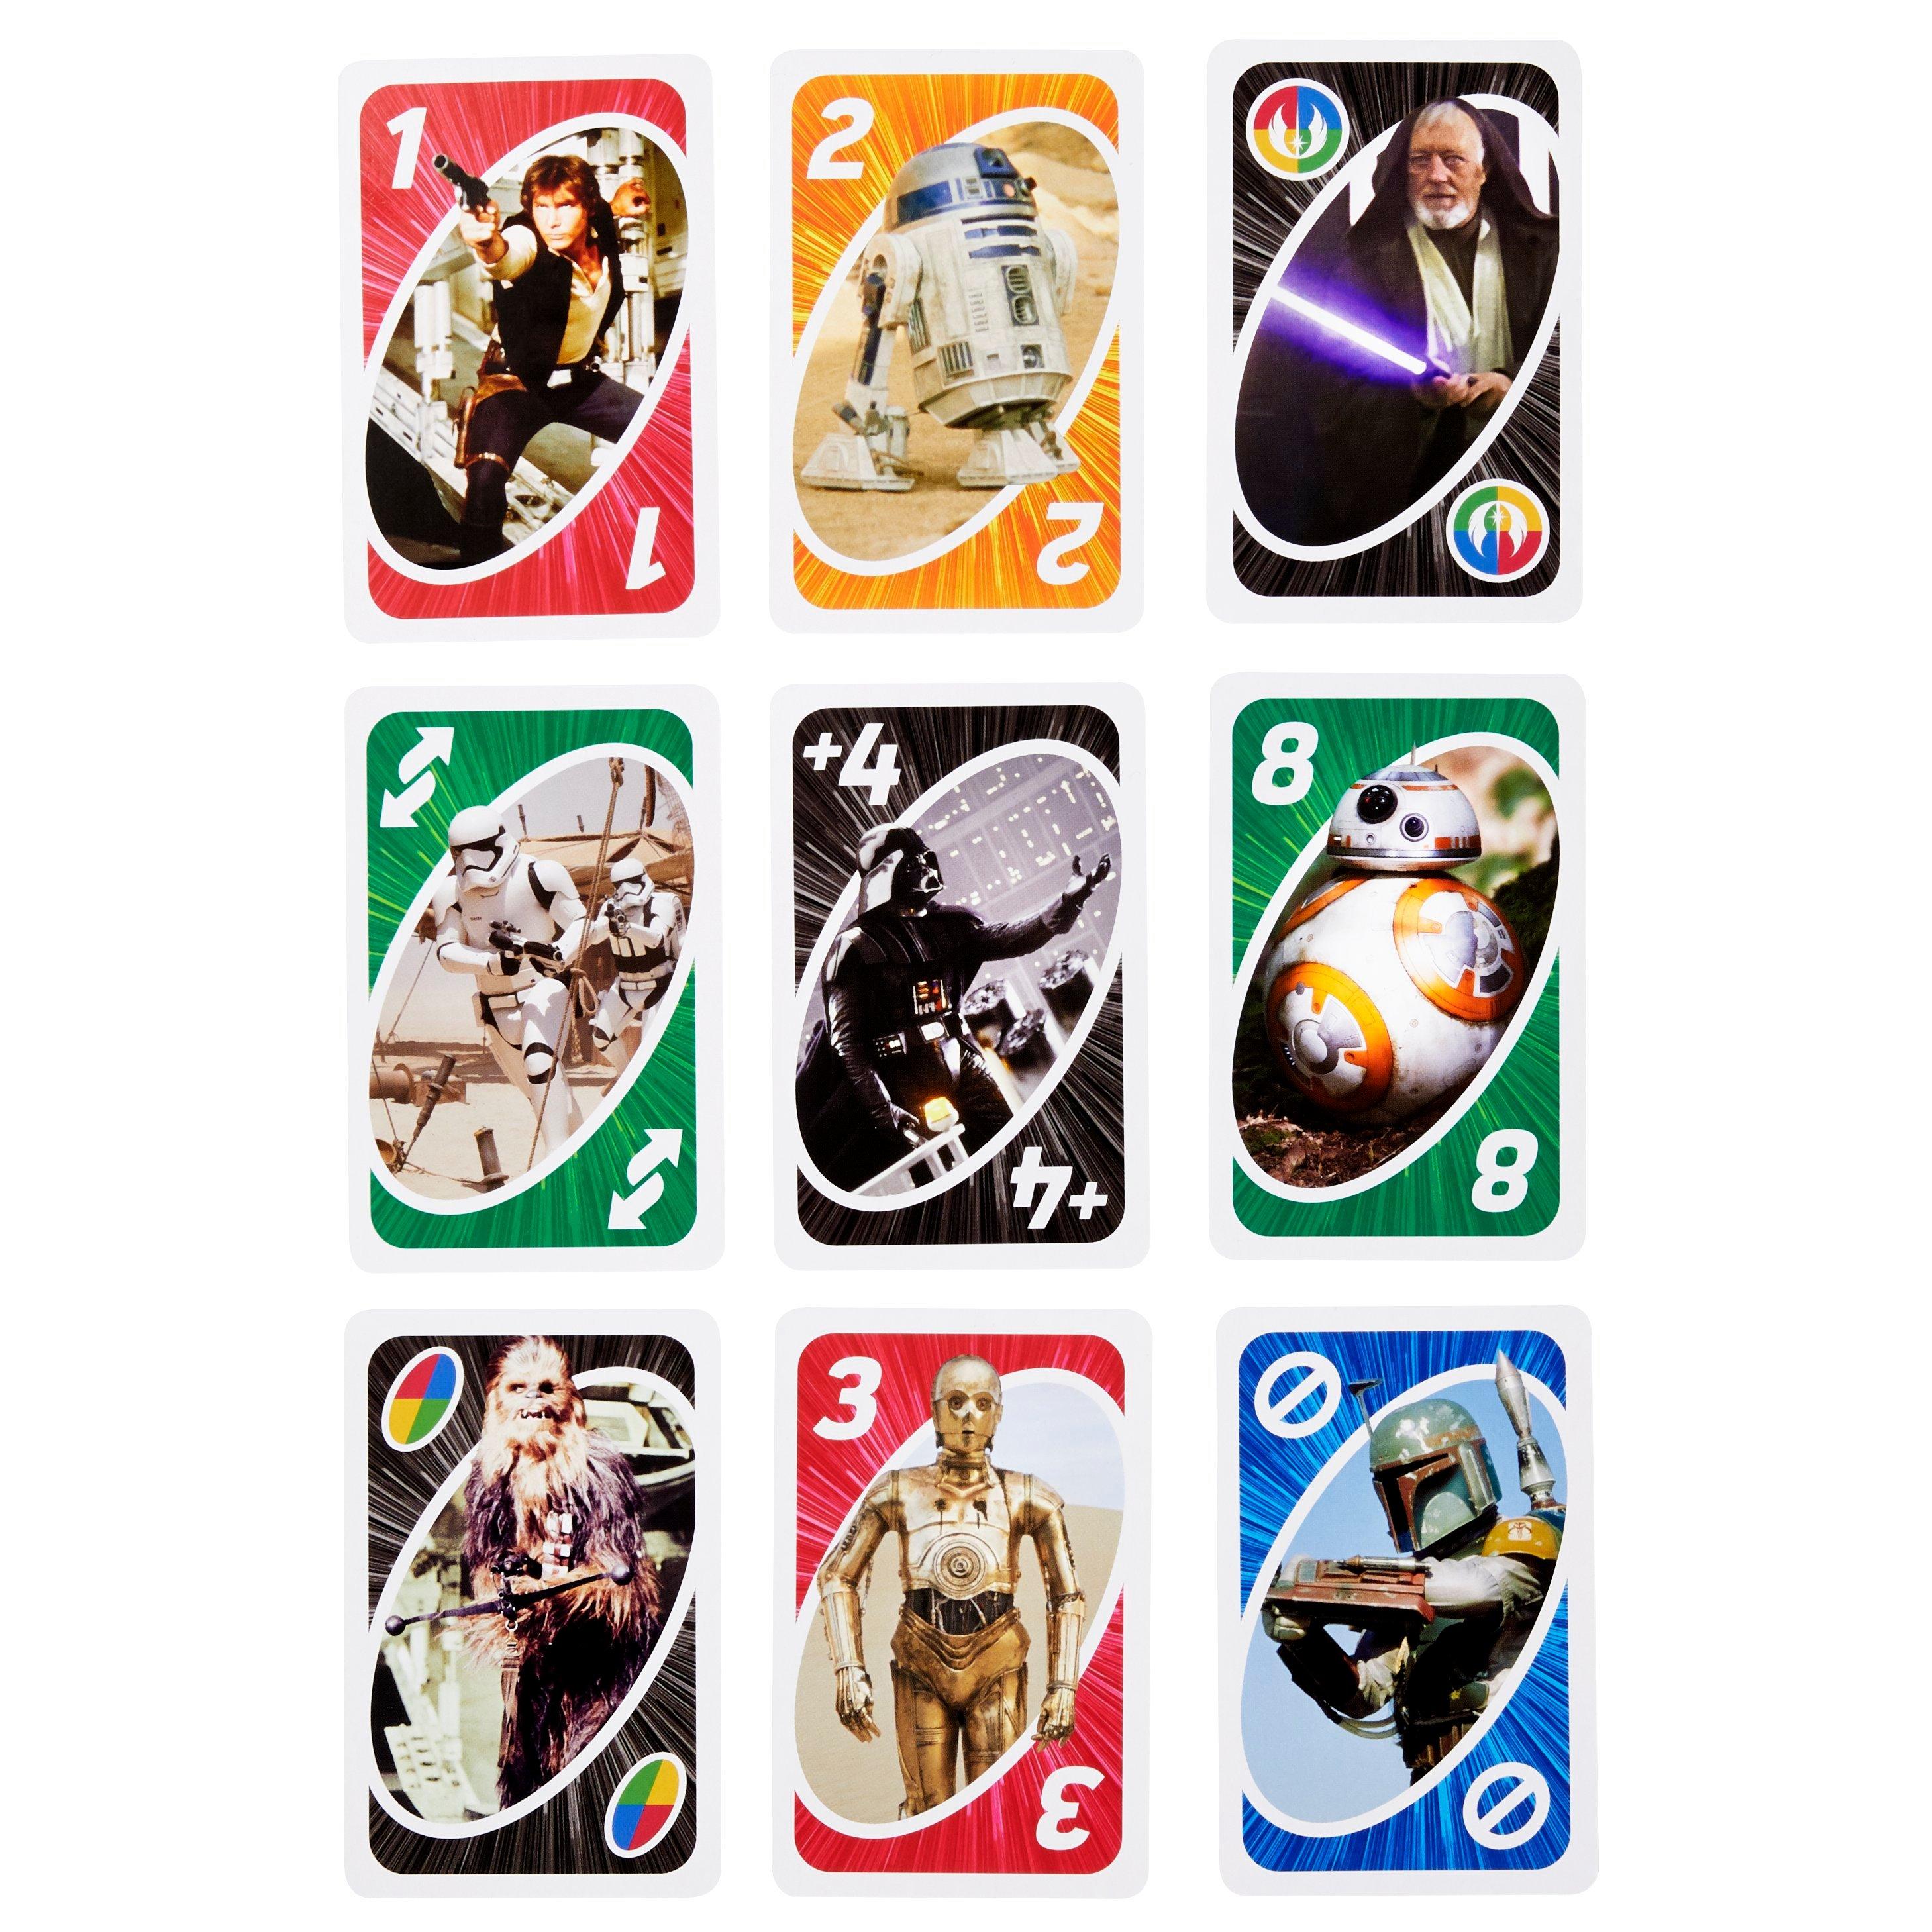 UNO Star Wars Card Game | GameStop